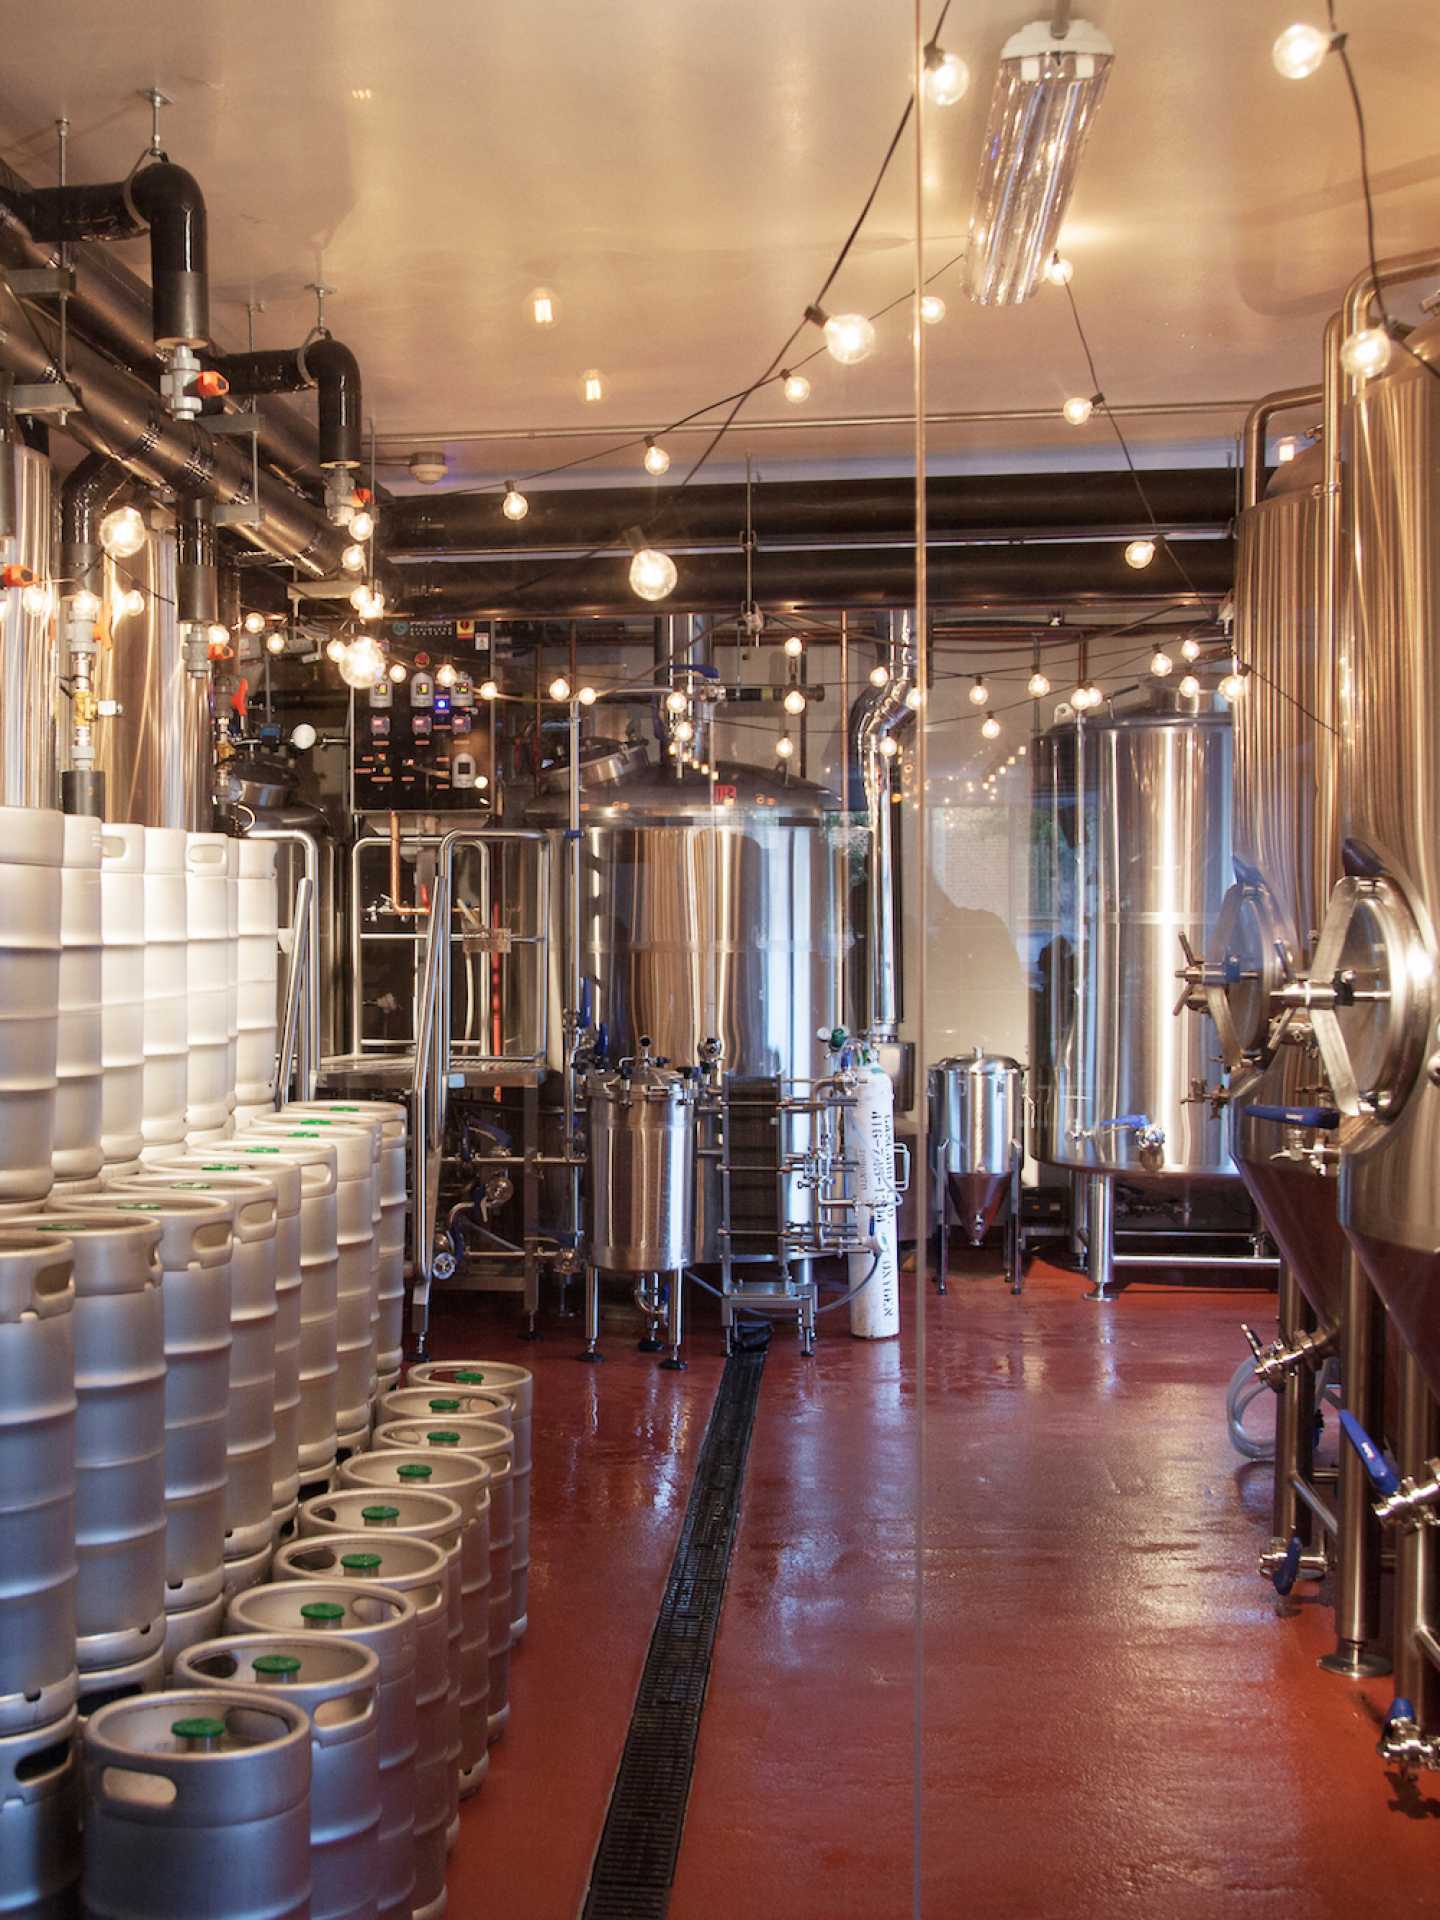 Toronto breweries | The brewing facilities at Burdock Brewery